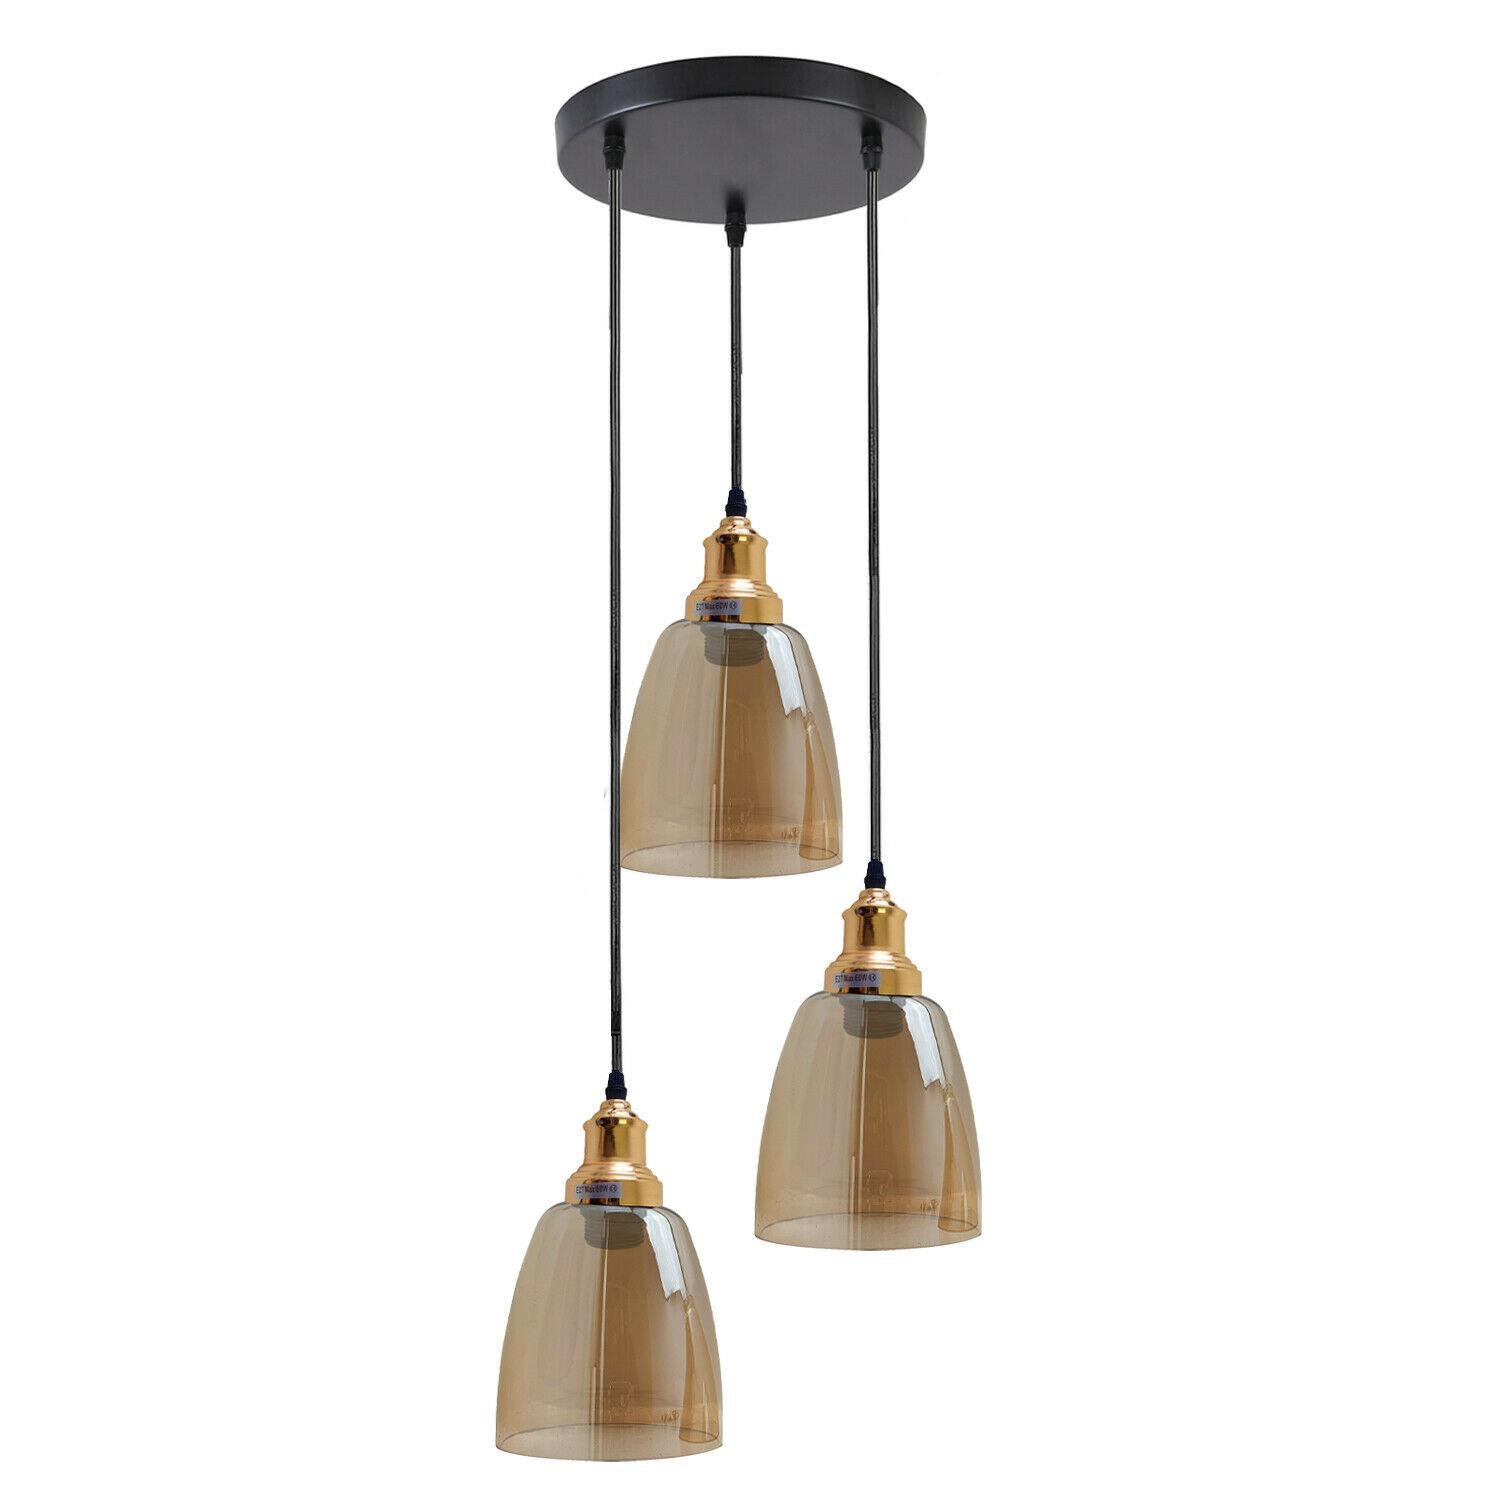 3 Outlet Industrial Retro Loft Glass Ceiling Lampshade Pendant Light~1428 - LEDSone UK Ltd